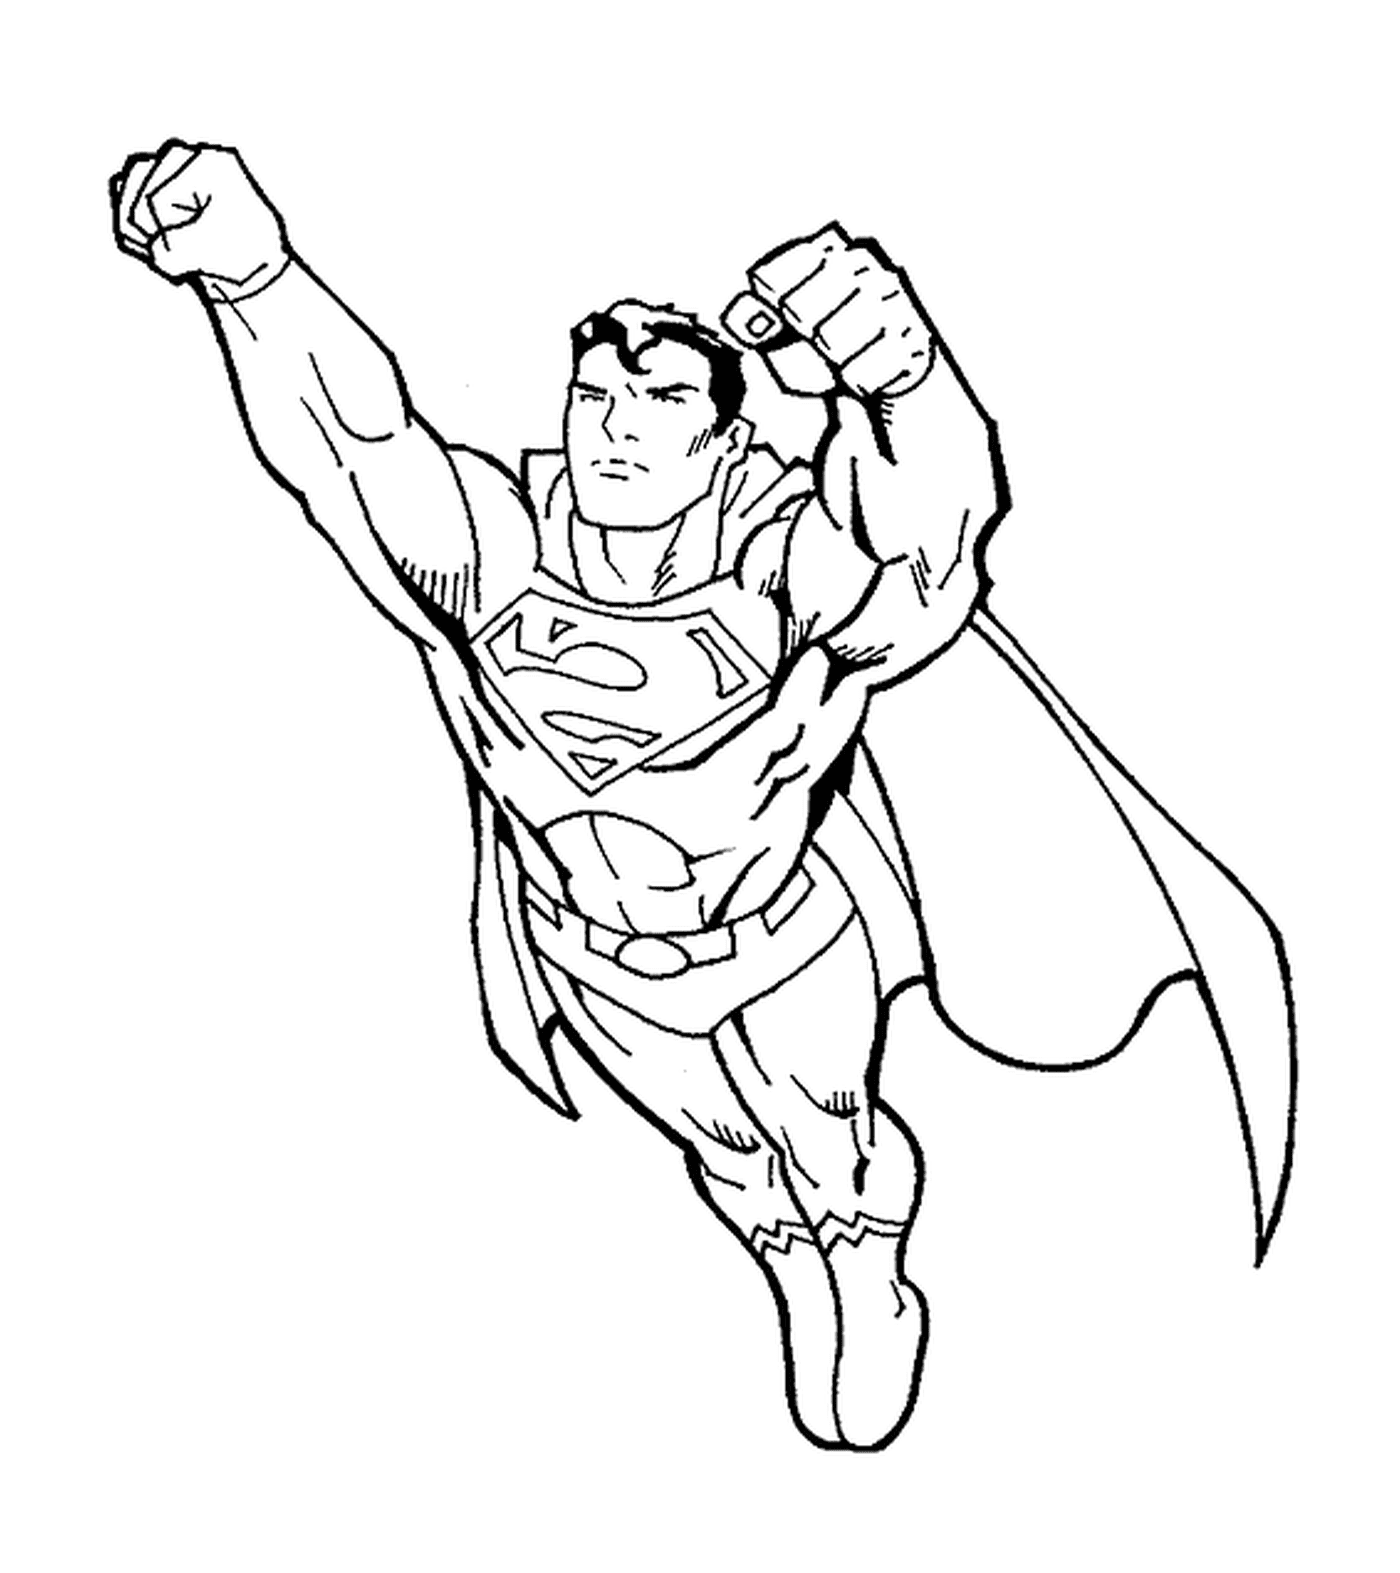  Супермен, кулаки вперед 